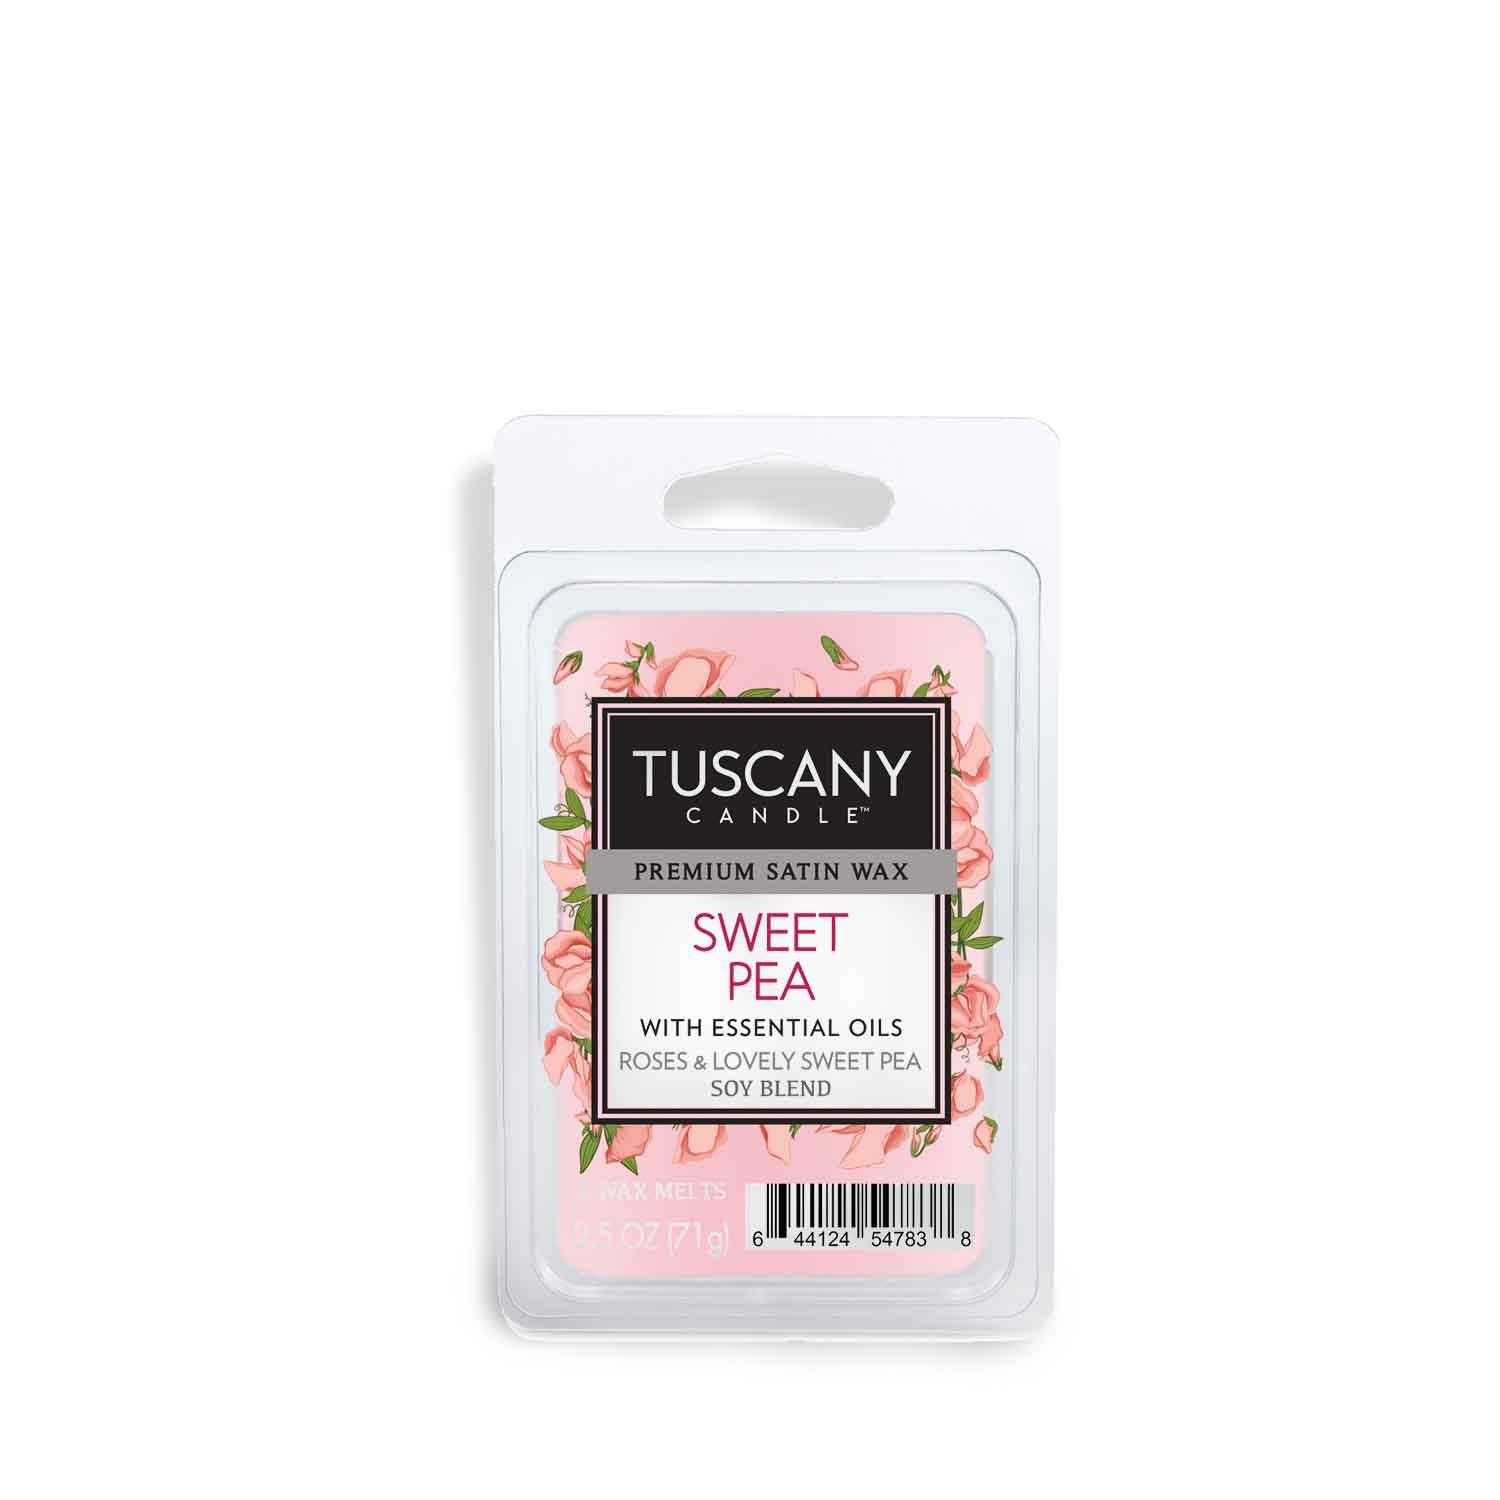 Tuscany Candle Wax Melts, Premium Satin, Sweet Pea - 6 wax melts, 2.5 oz